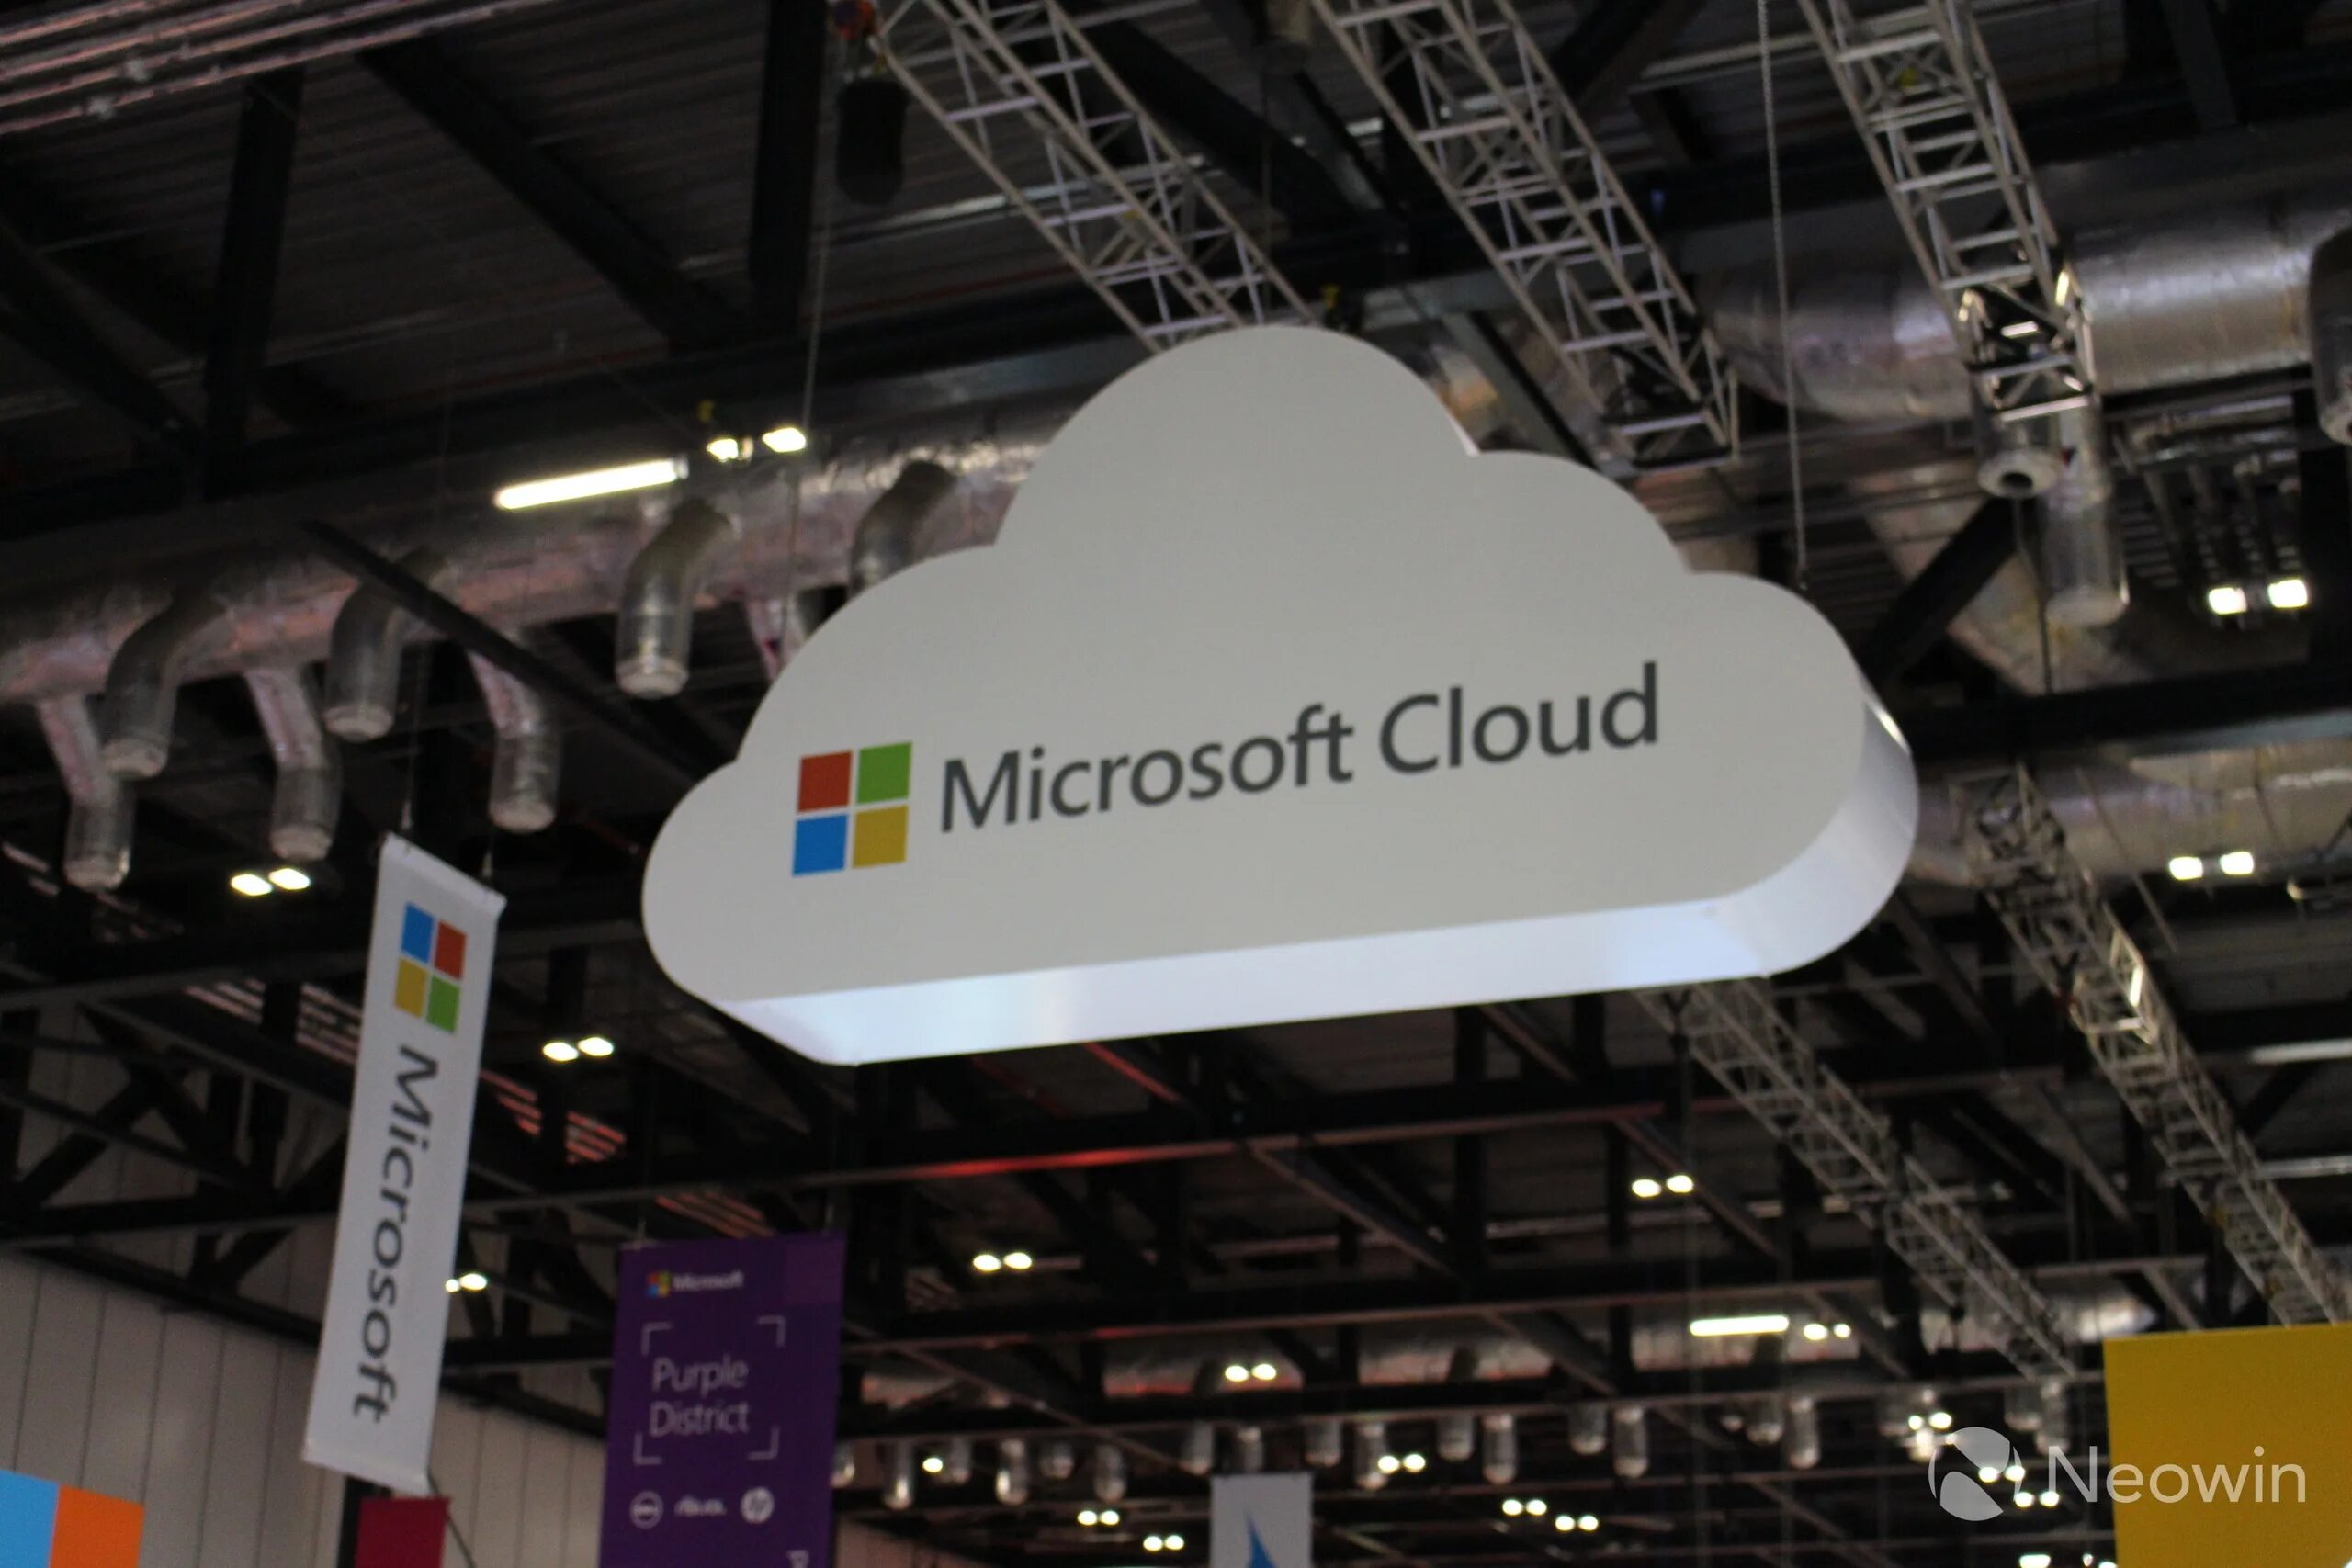 Microsoft cloud. Microsoft cloud services. Microsoft cloud logo. Microsoft cloud for Manufacturing. Облачные сервисы microsoft amazon и google